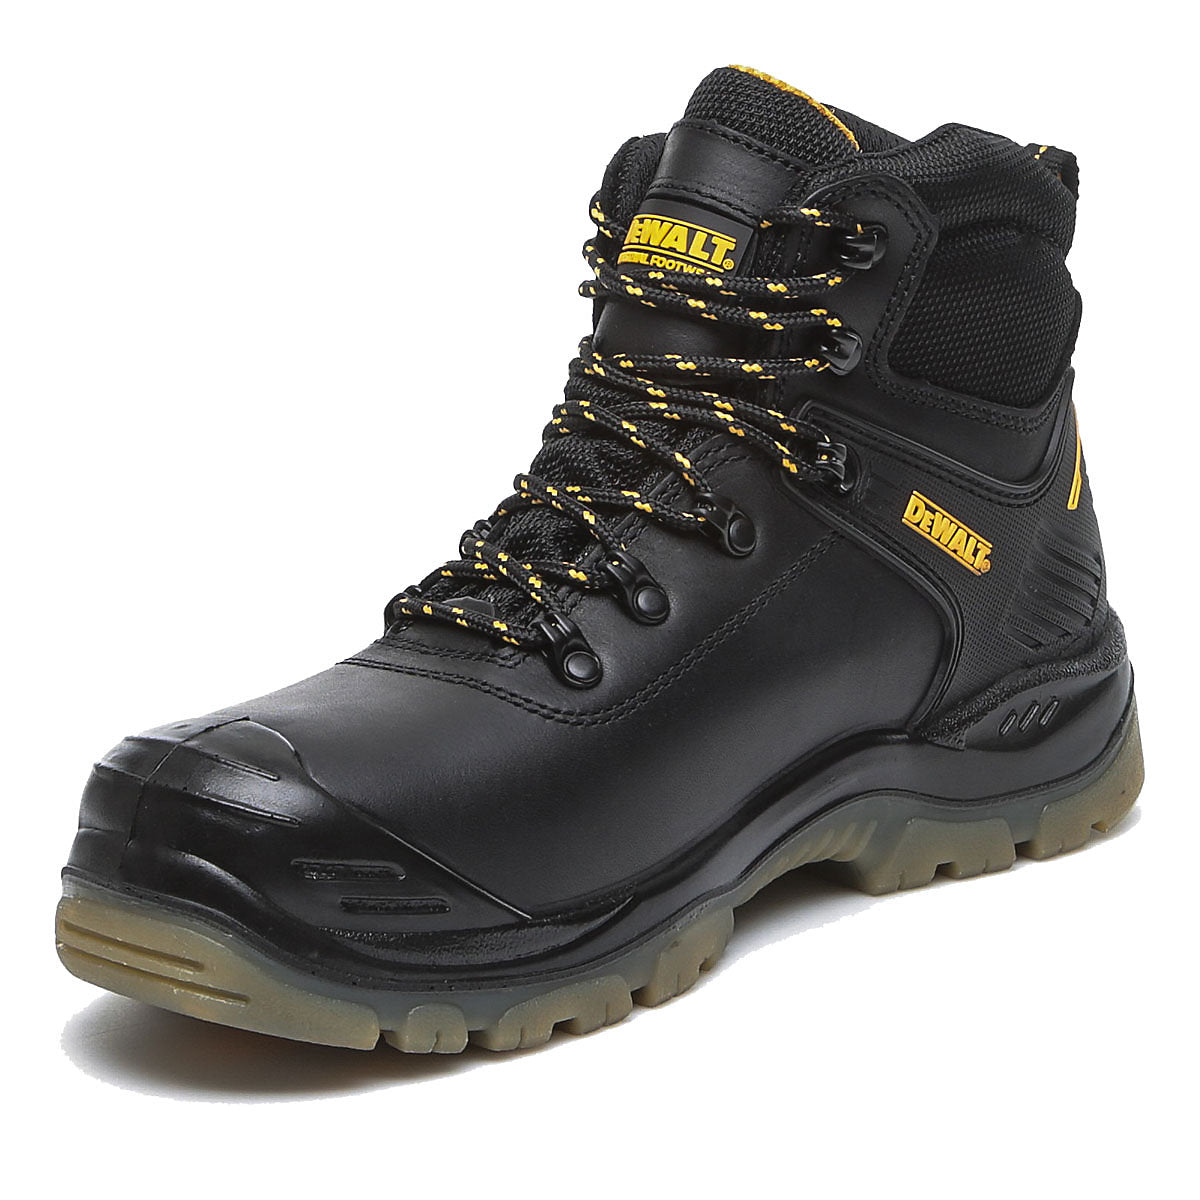 DeWalt Newark Men's Black Safety boots, Size 10 0026